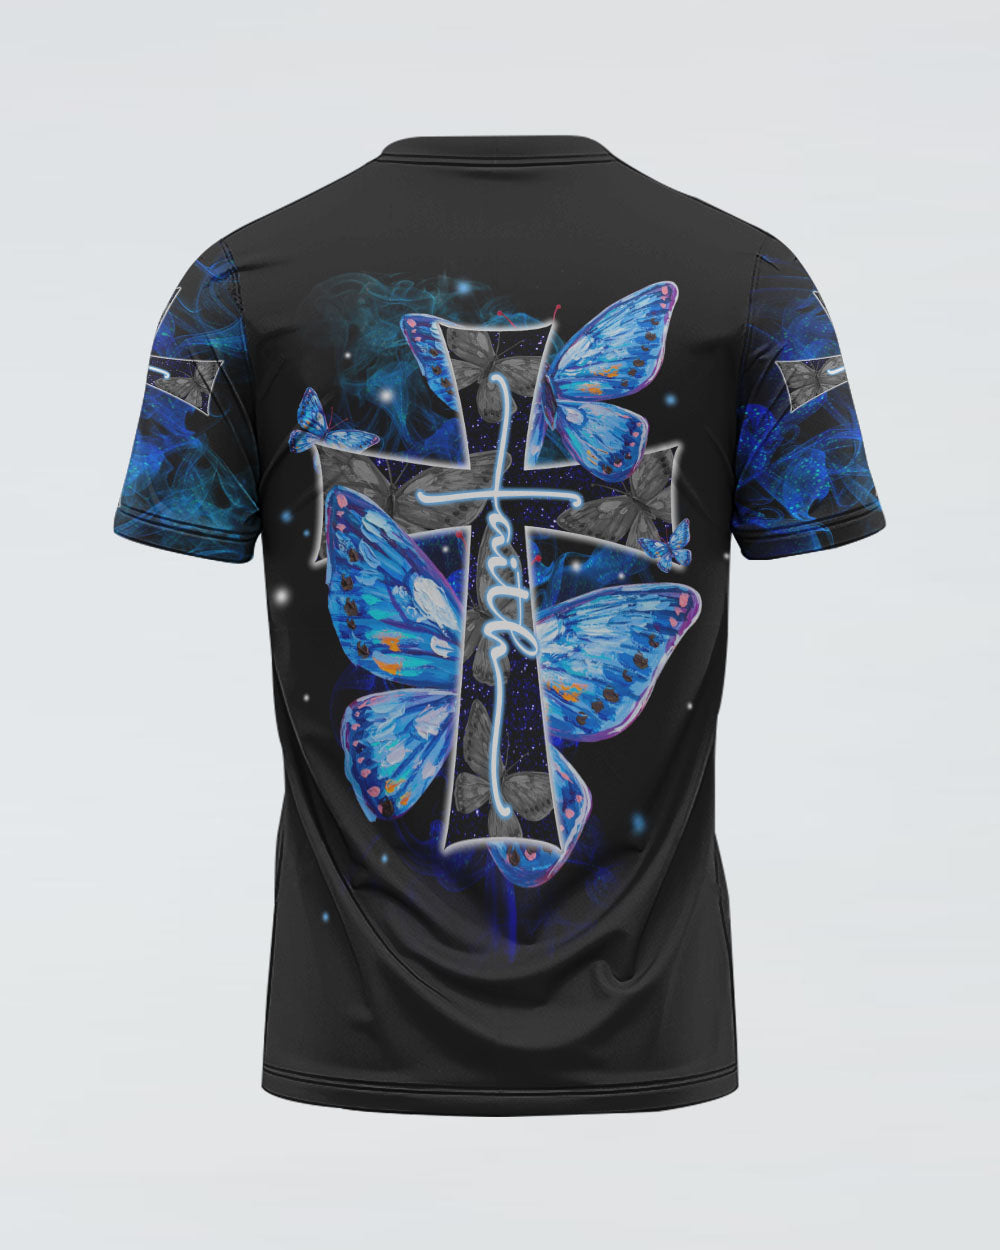 Faith Cross Blue Butterfly Smoke Women's Christian Tshirt